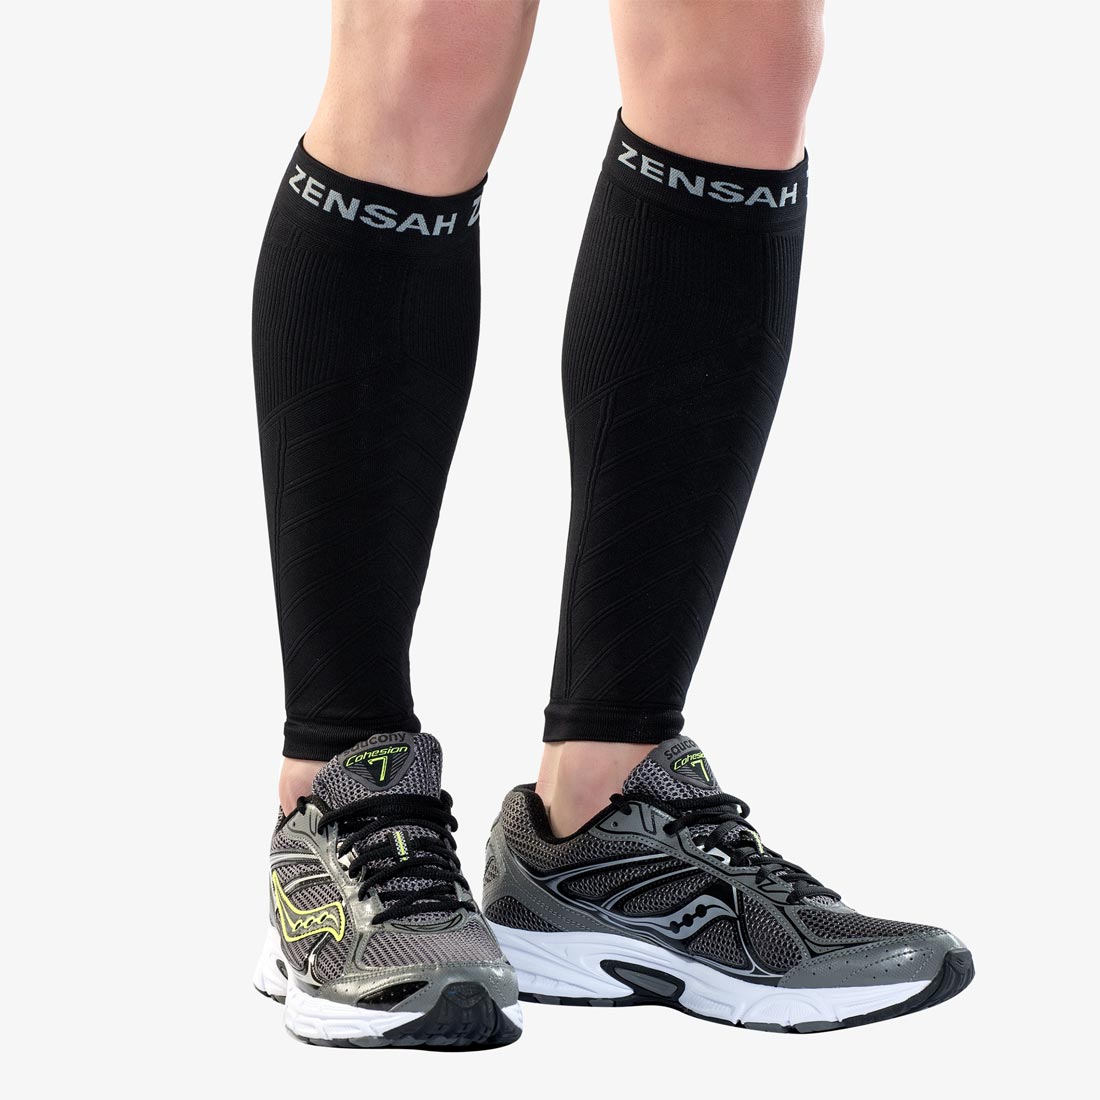 JUST RIDER Sports Calf Compression Sleeve - Shin Splint Leg